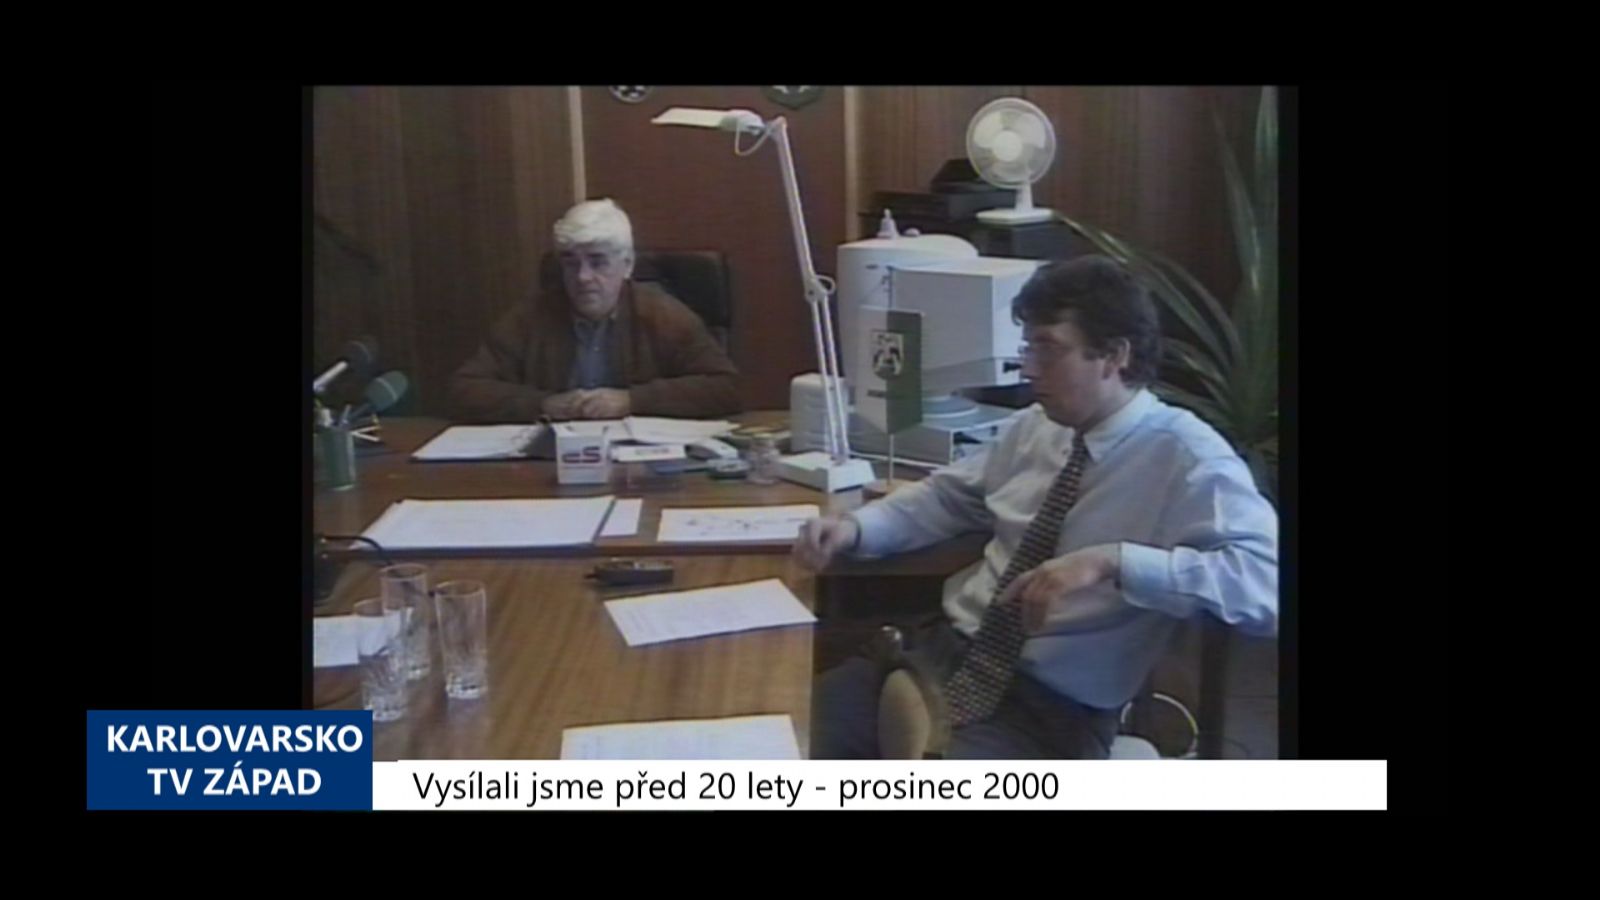 2000 – Sokolov: Rozpočet města 2001 bude vyrovnaný (TV Západ)